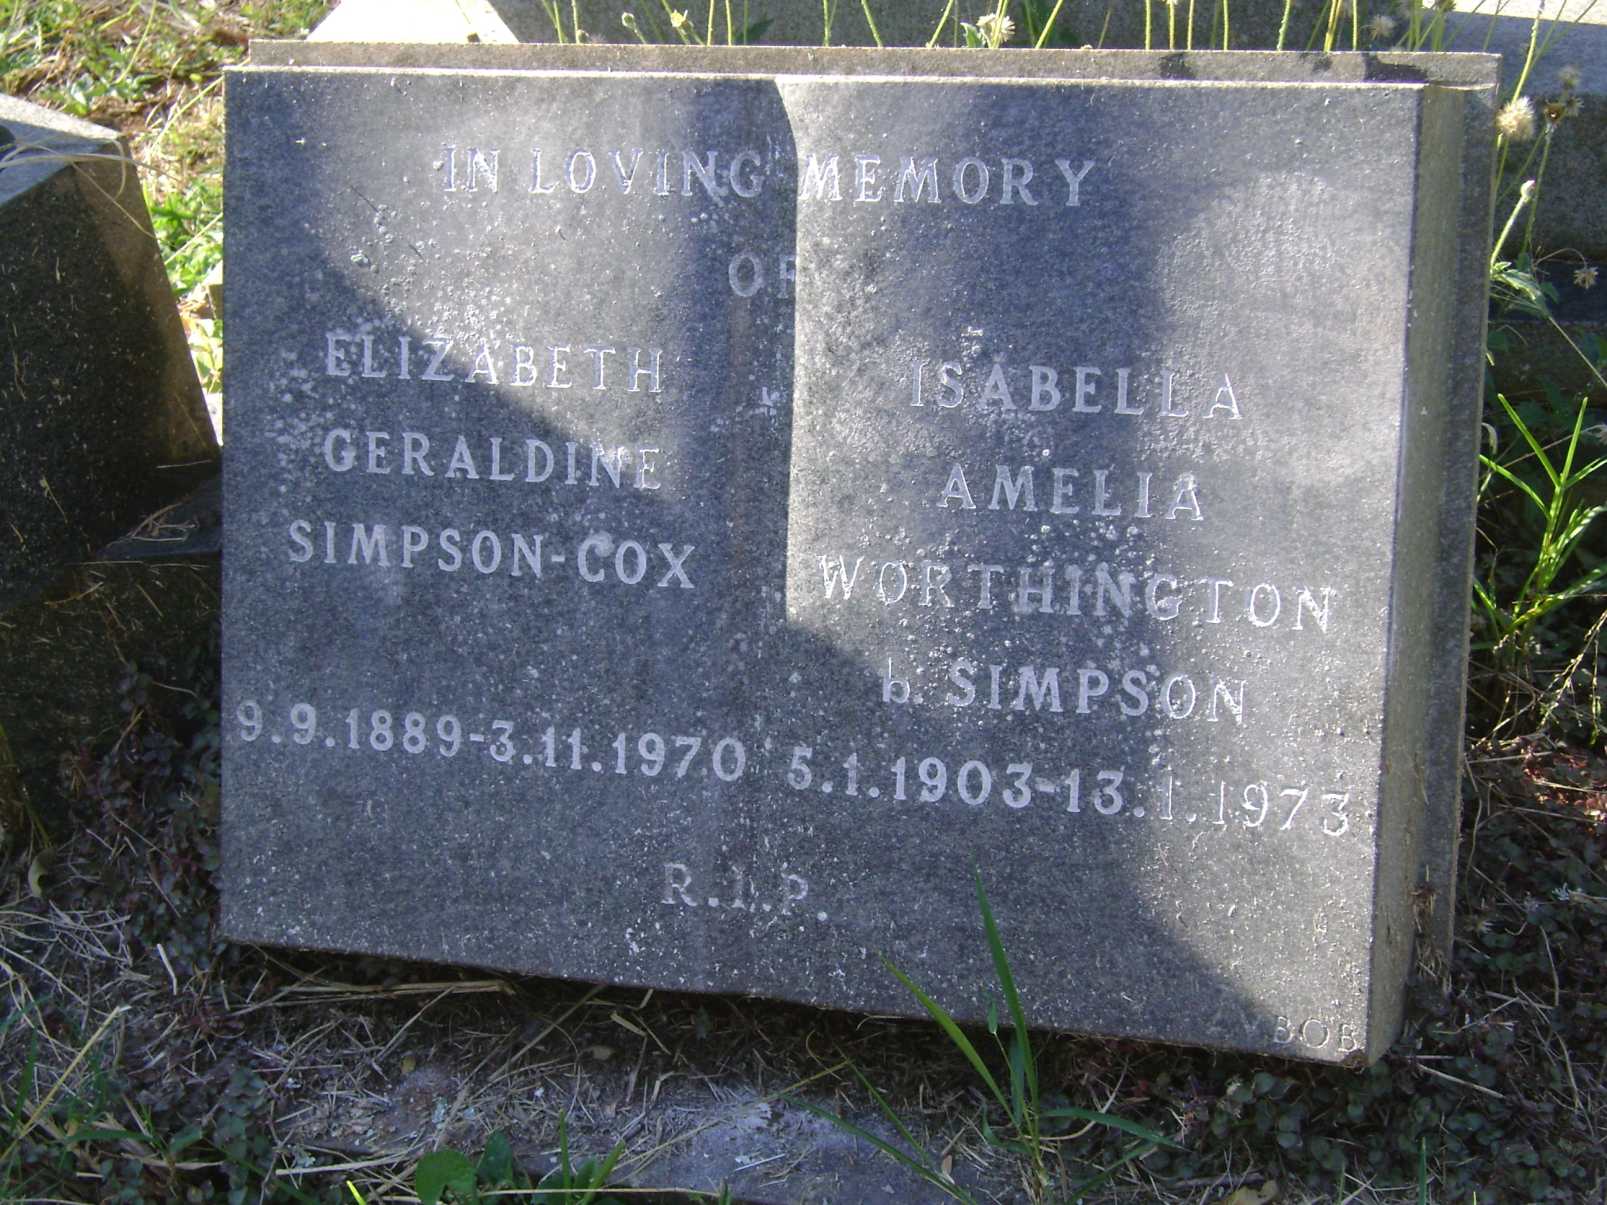 COX Elizabeth Geraldine, SIMPSON 1889-1970 :: WORTHINGTON Isabella Amelia nee SIMPSON 1903-1973